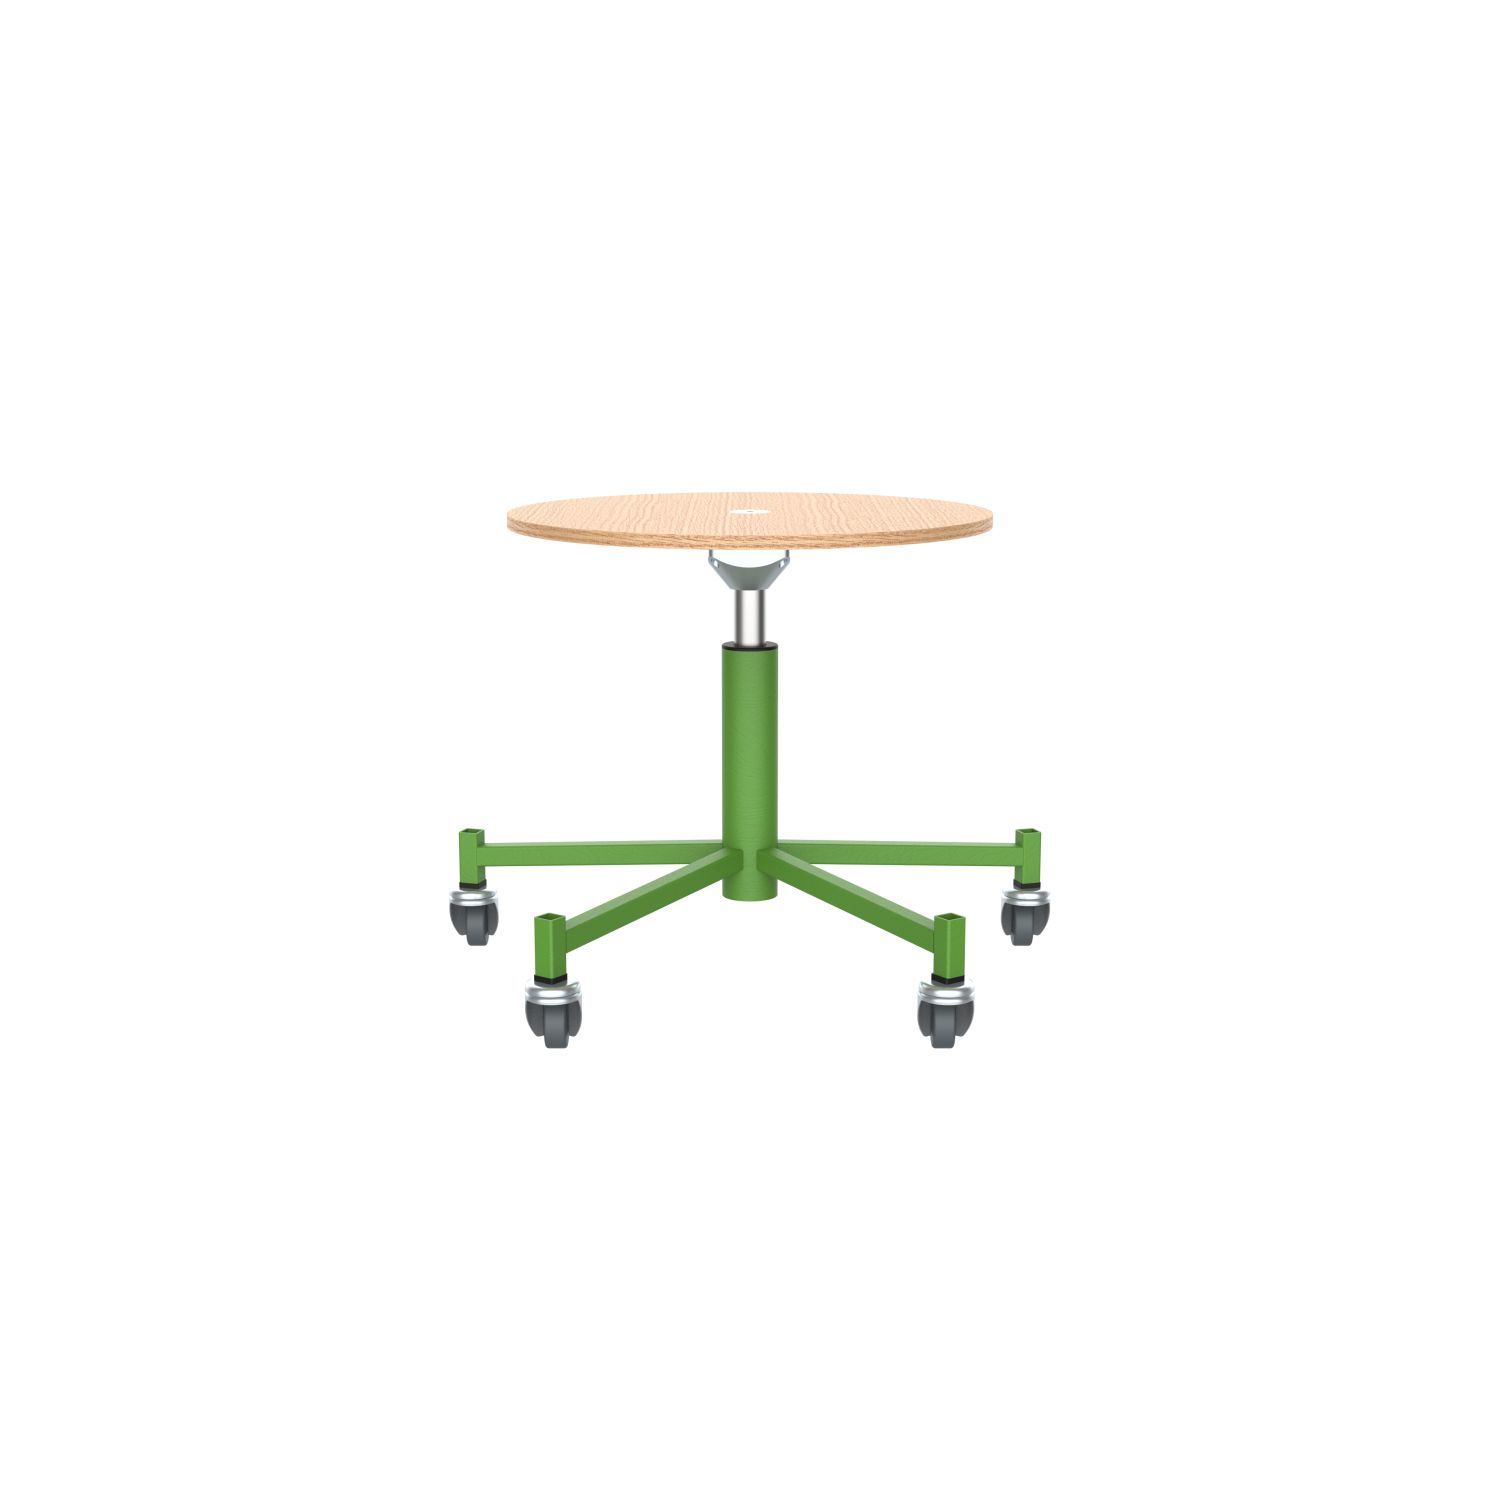 lensvelt piet hein eek mitw wooden stool with wheels natural oak yellow green ral6018 with wheels